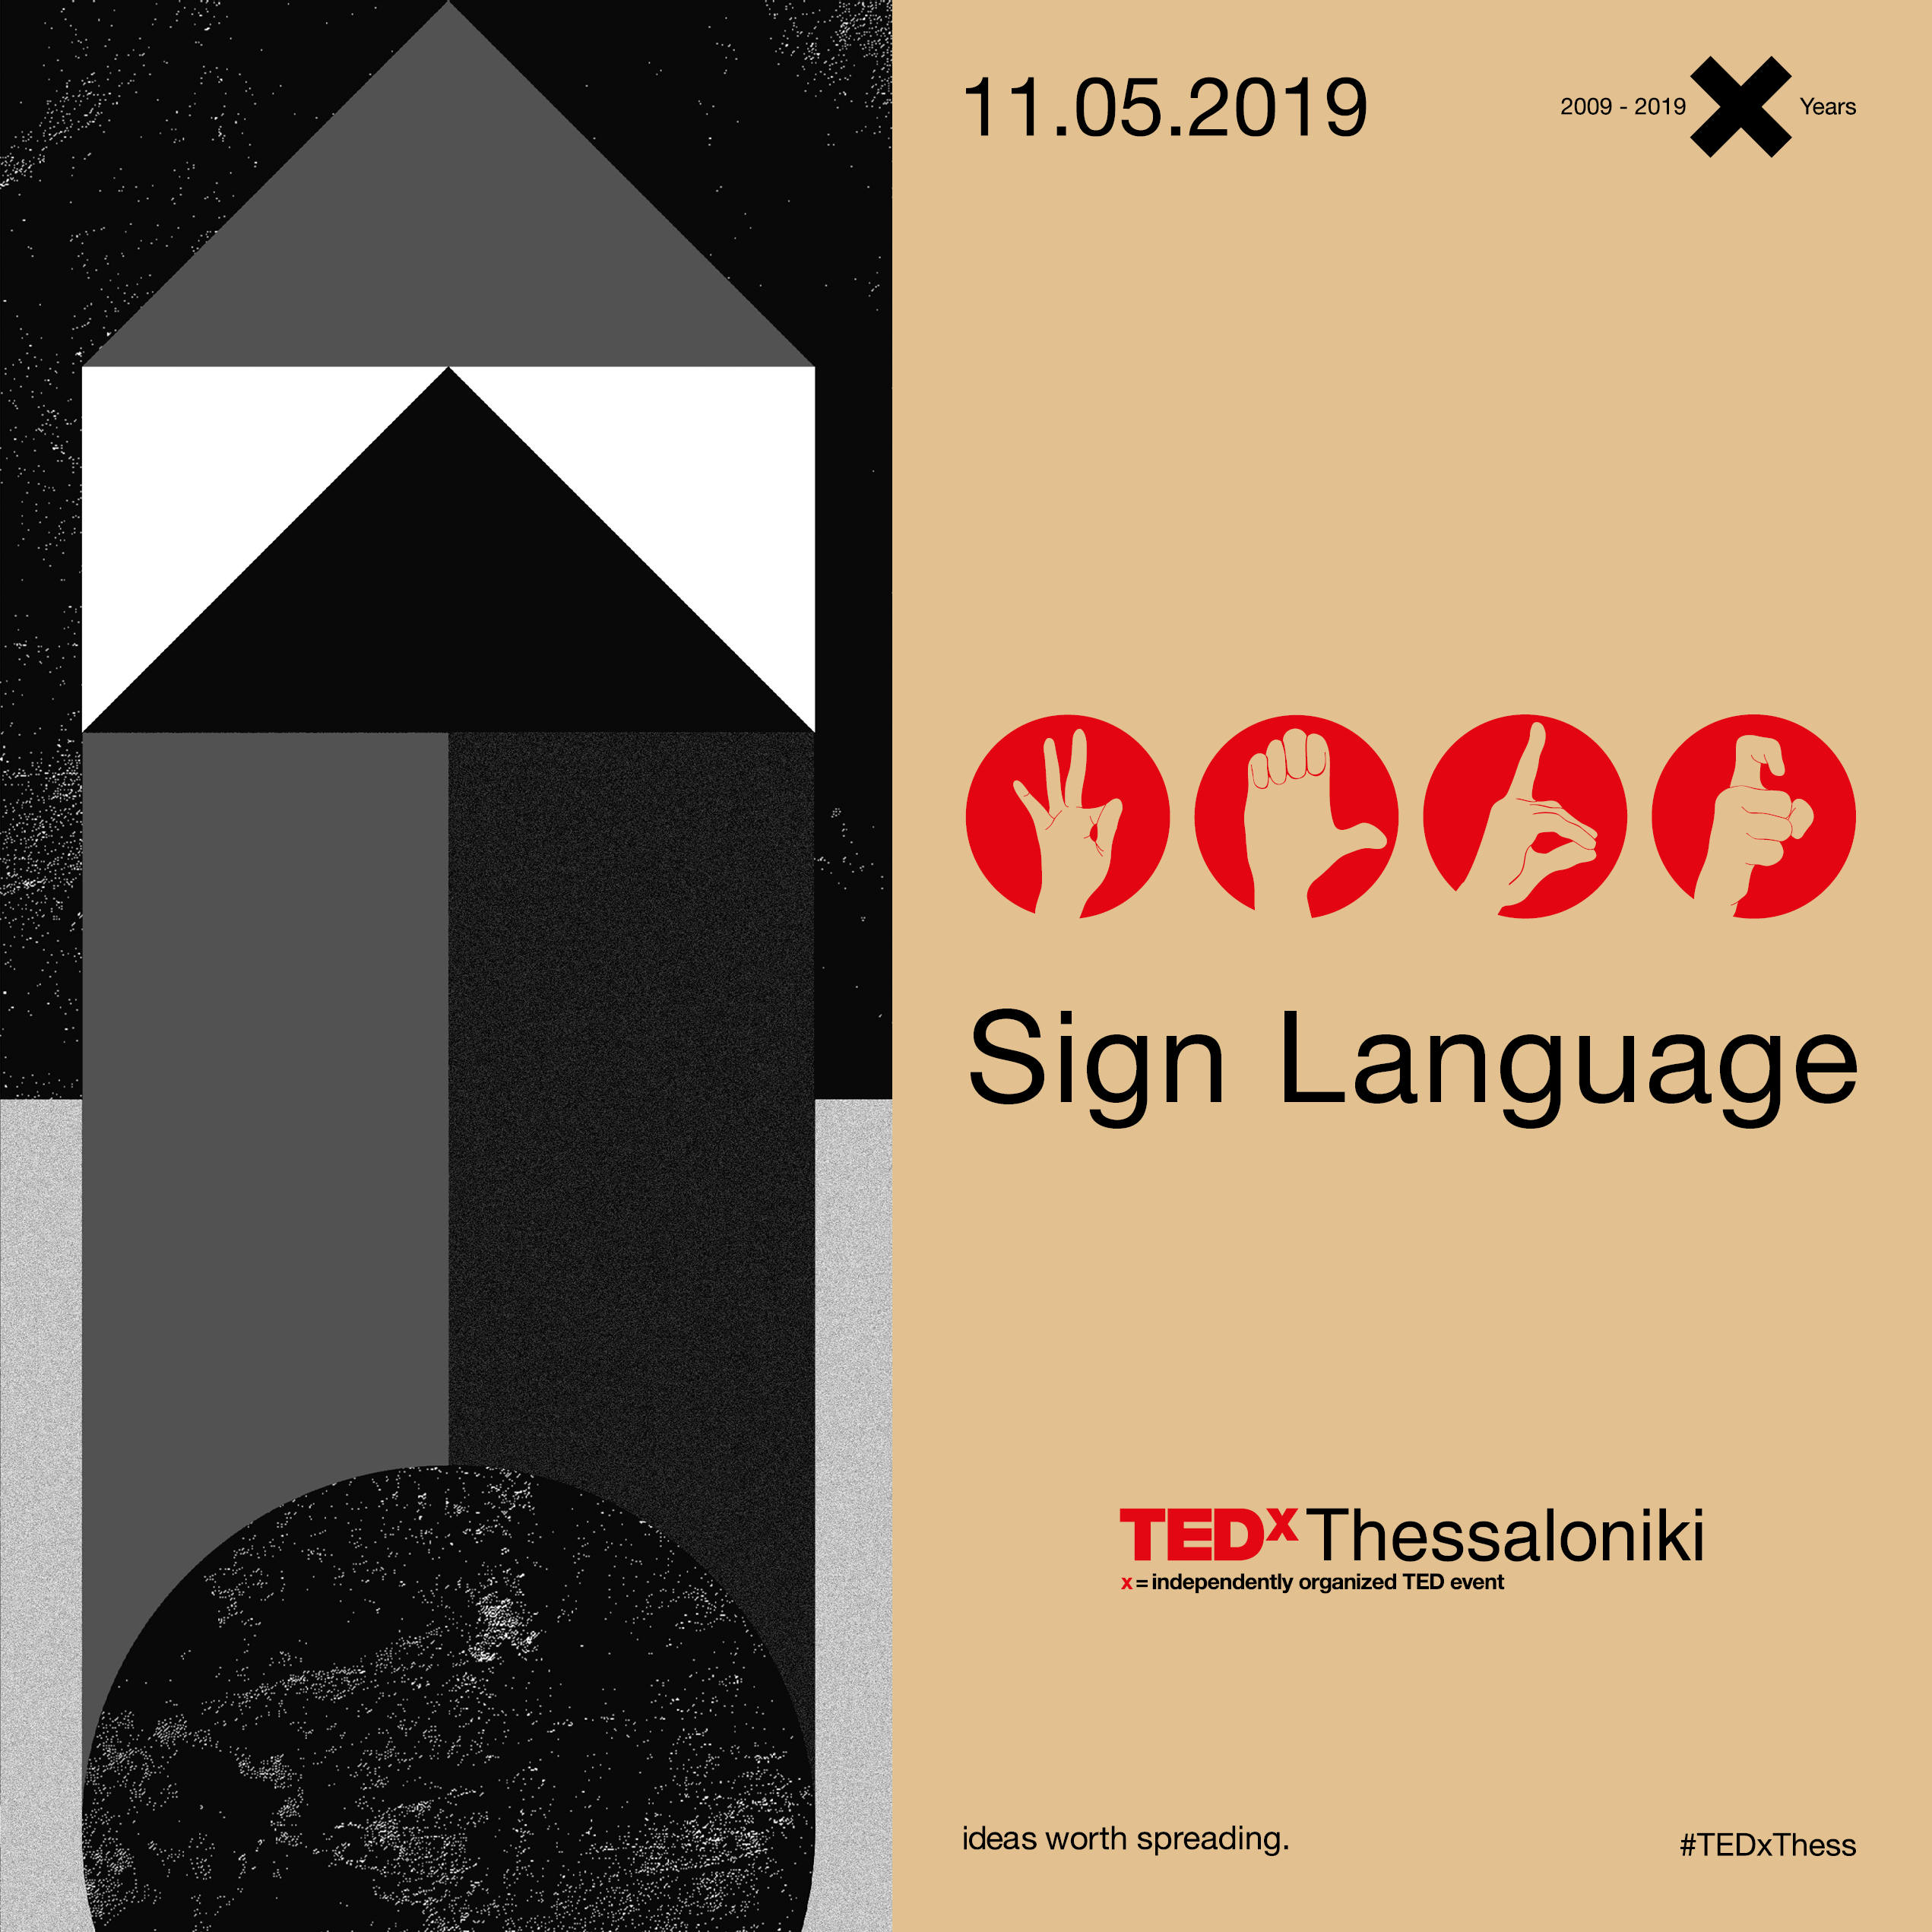 atzeda_tedxthessaloniki_sign_language.jpg